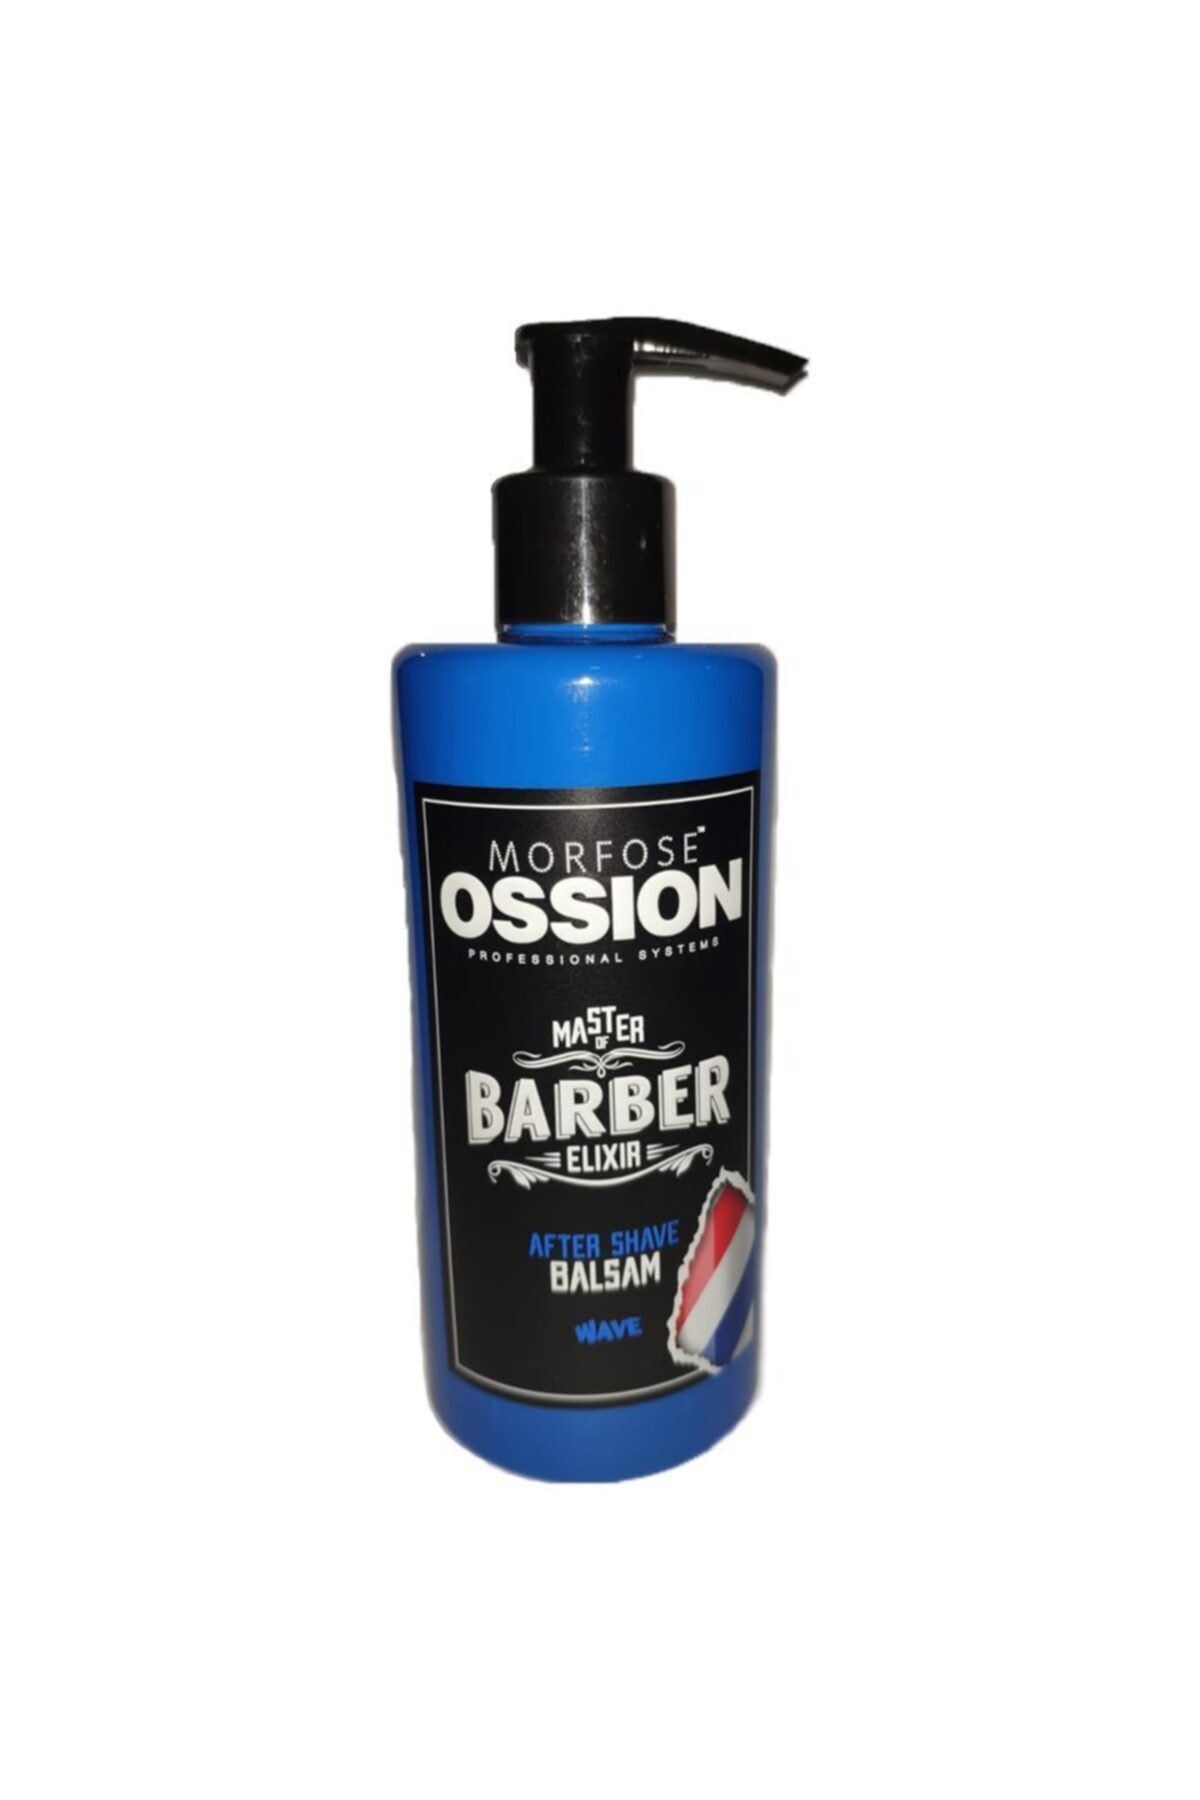 Morfose Ossion After Shave Balsam Wave 300ml